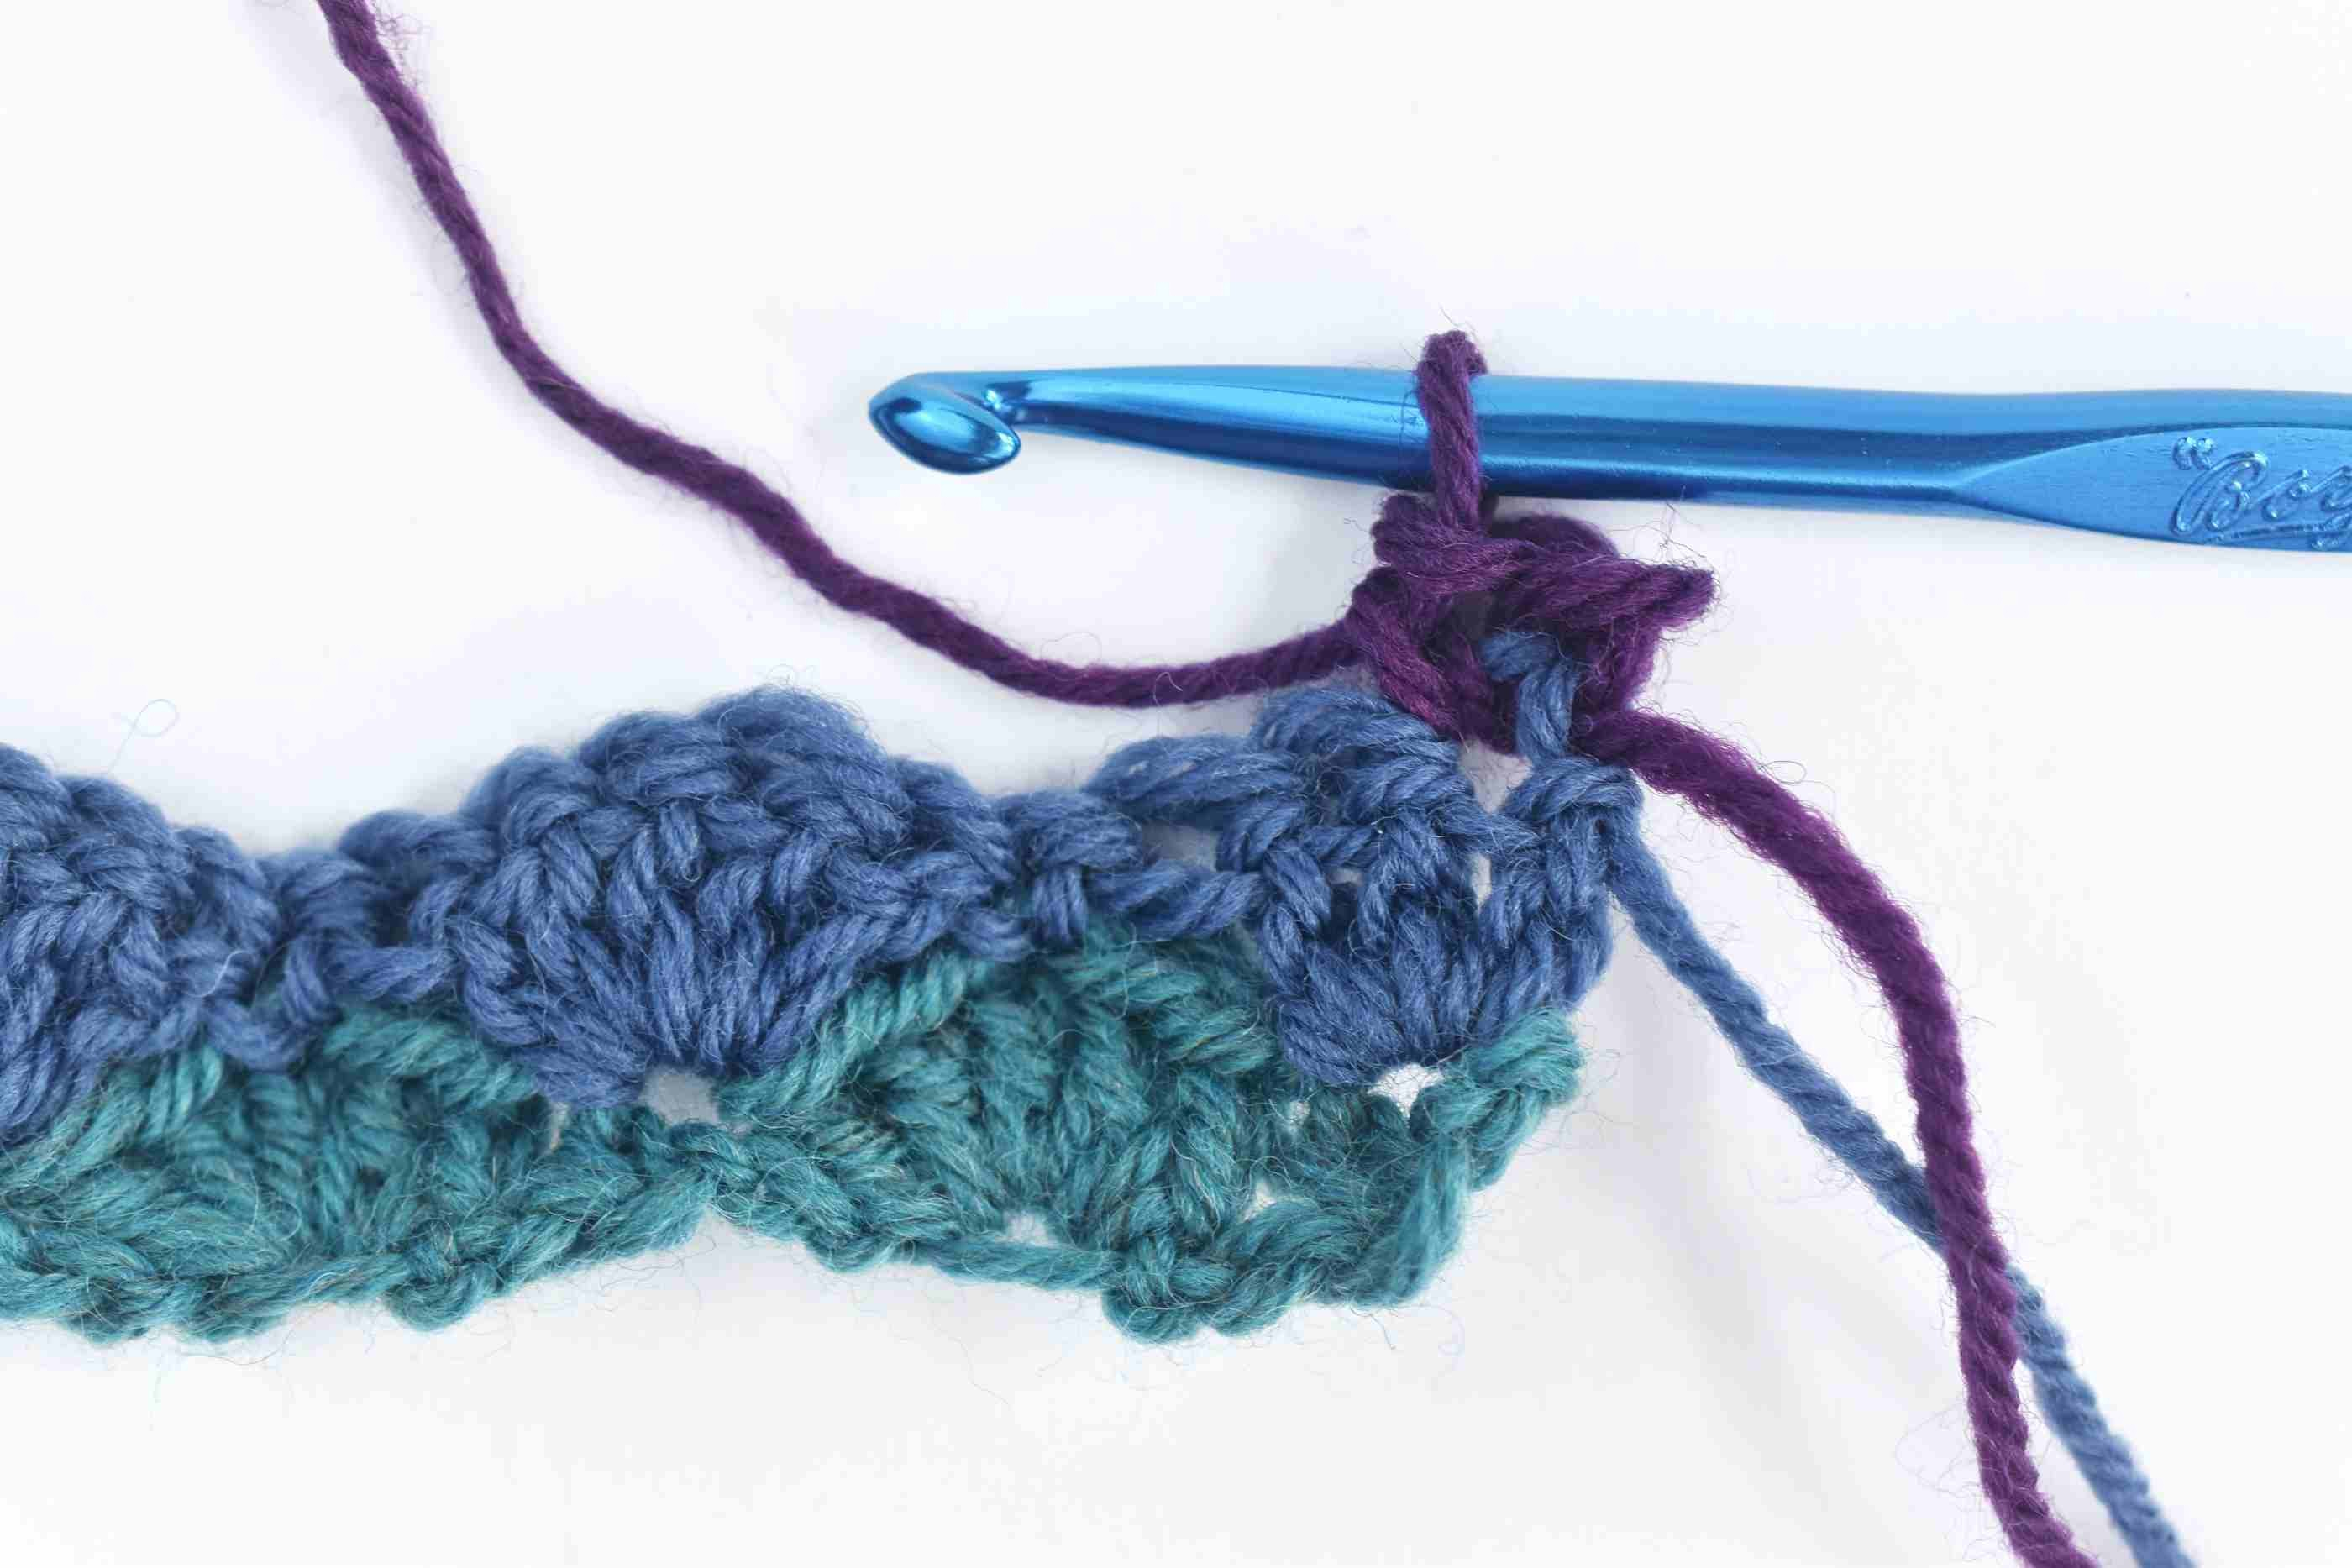 Free Crochet Shrug Patterns Crochet Shrug Pattern Free Plus Size New How To Crochet Shell Stitch